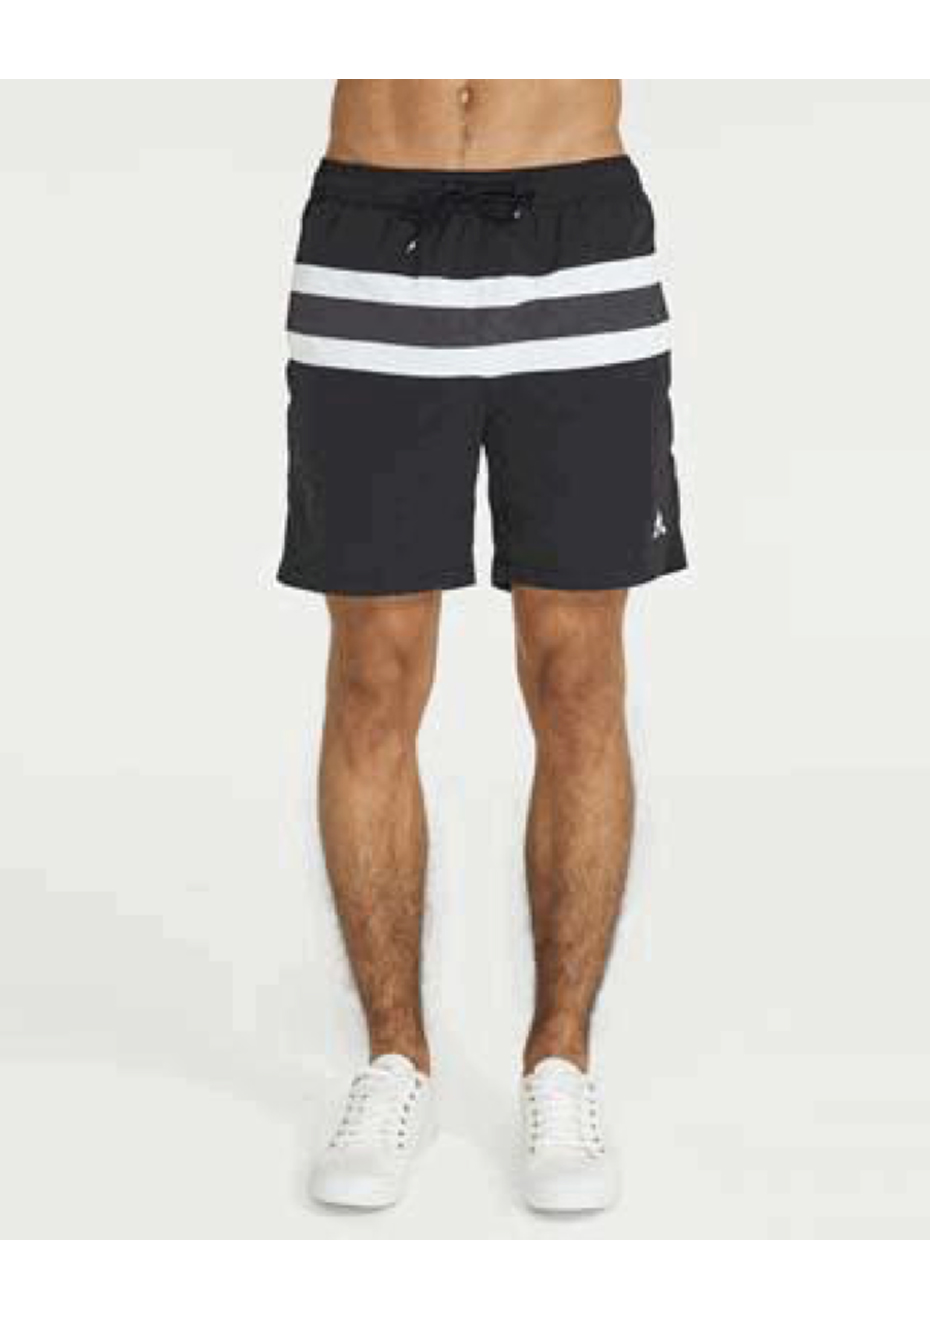 sportif shorts outlets